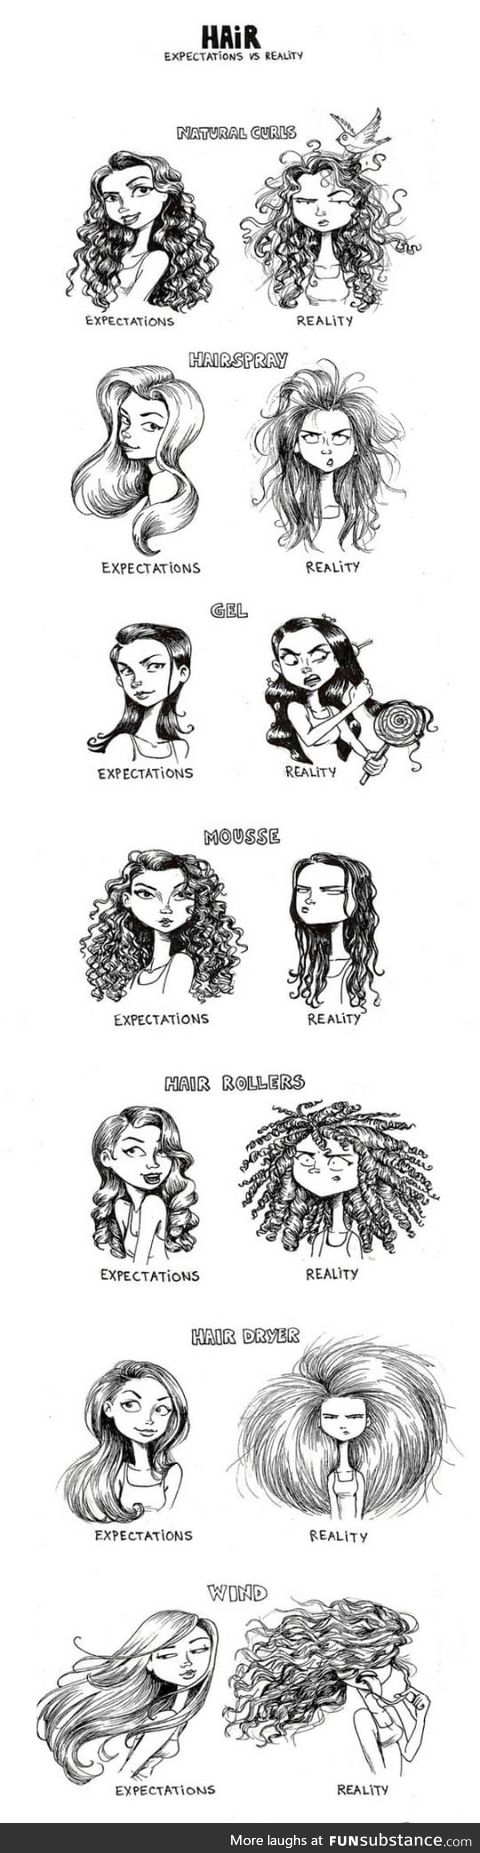 Women's Hair: Expectations Vs. Reality